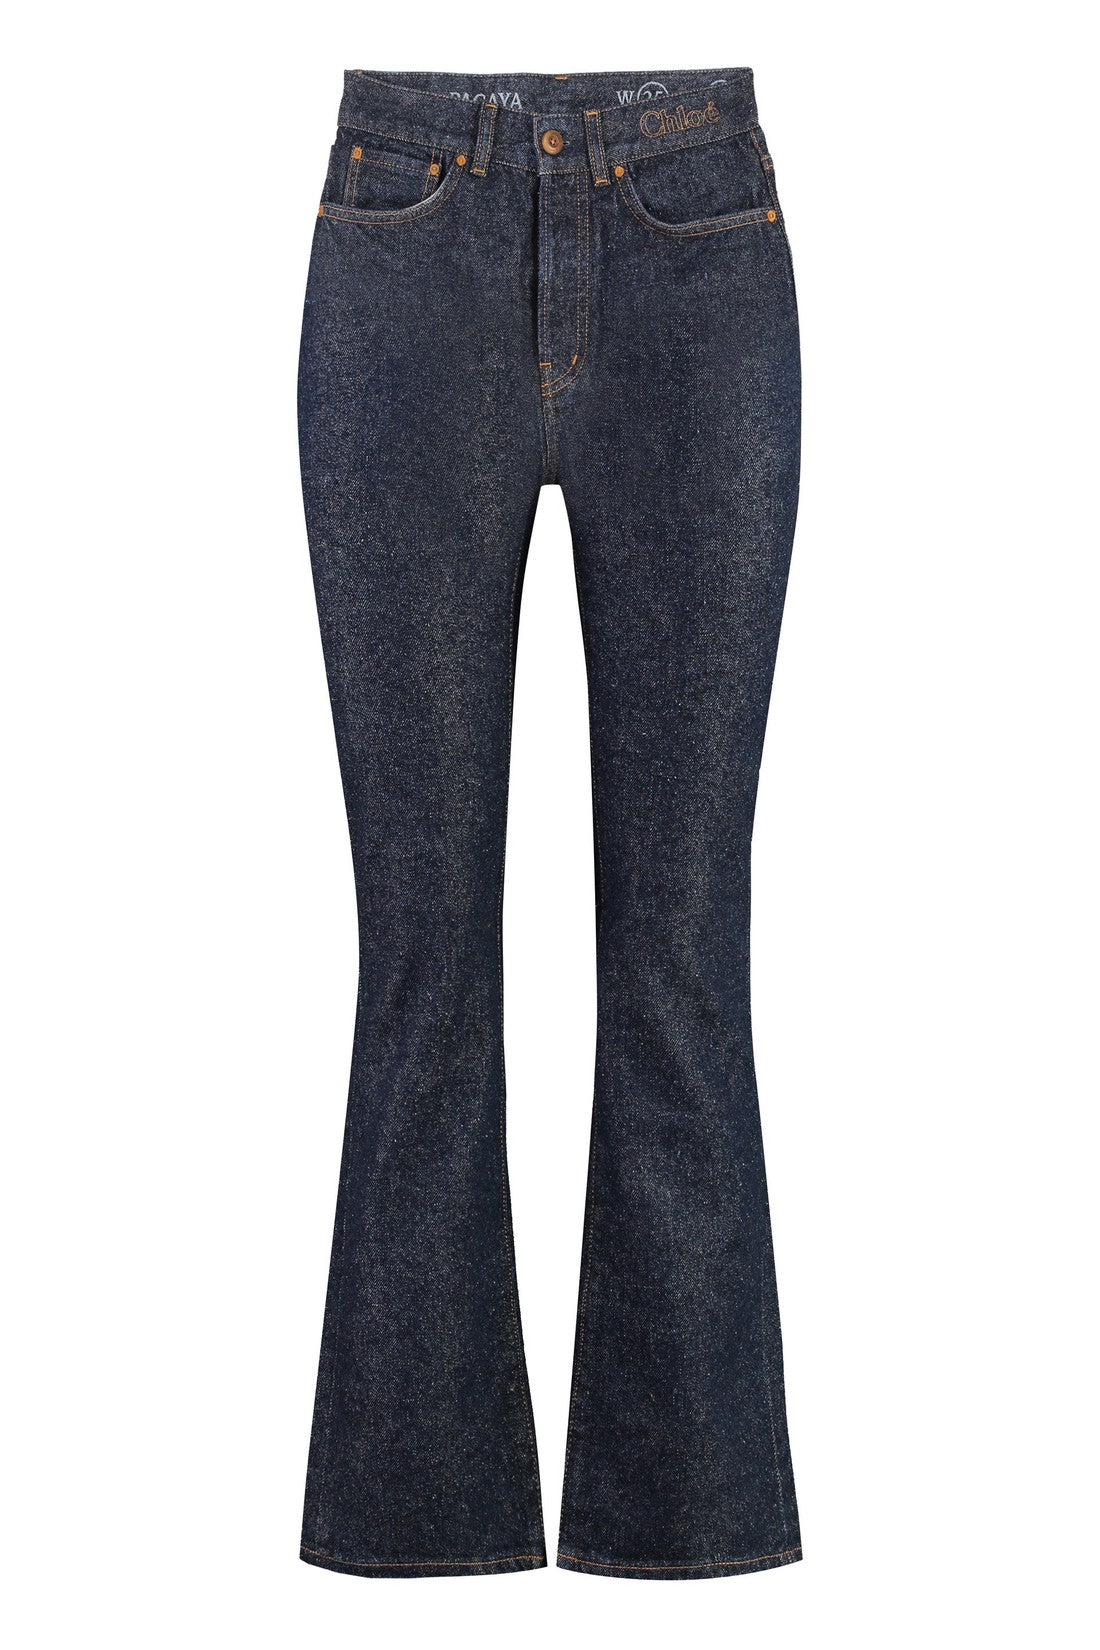 Chloé-OUTLET-SALE-High-rise flared jeans-ARCHIVIST